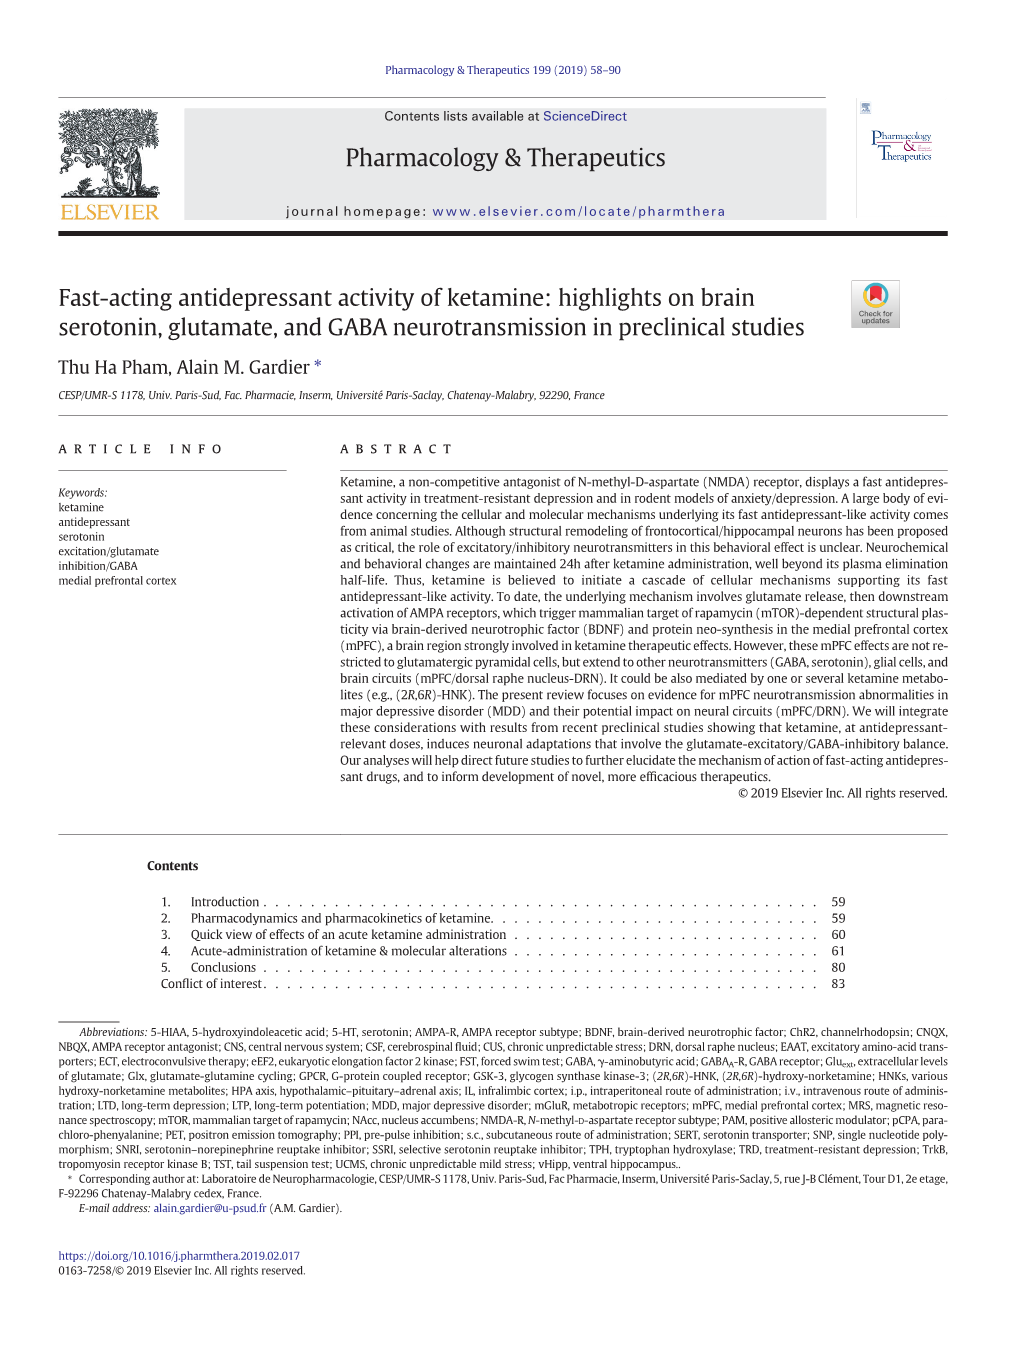 Fast-Acting Antidepressant Activity of Ketamine: Highlights on Brain Serotonin, Glutamate, and GABA Neurotransmission in Preclinical Studies